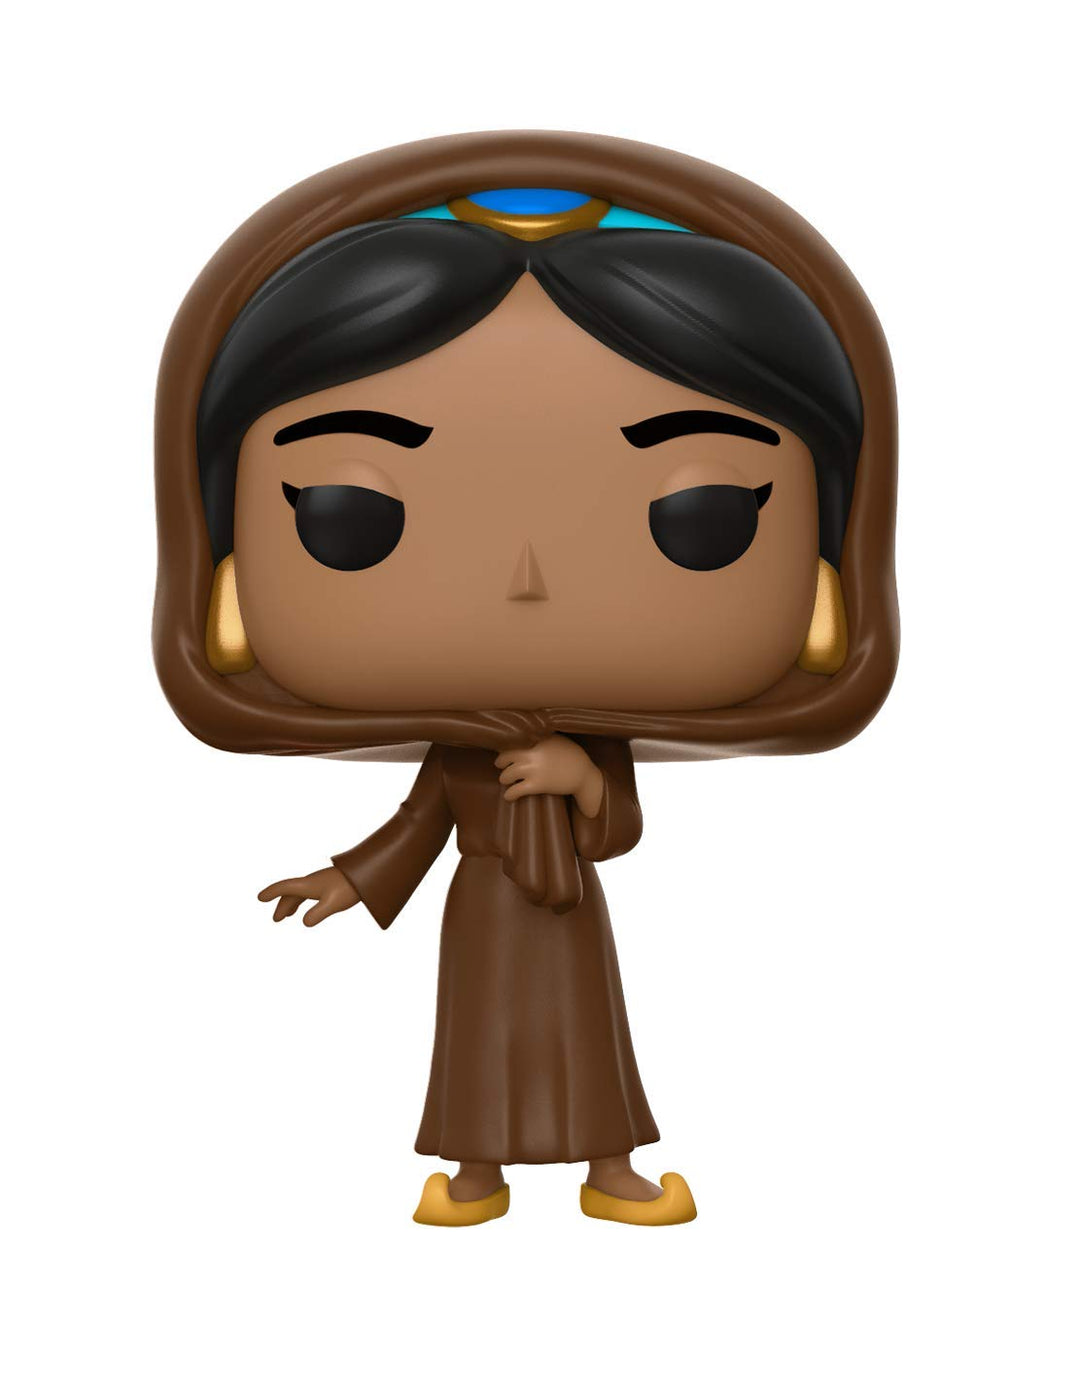 Funko Pop Disney Aladdin - Jasmine in Disguise Vinyl Figure